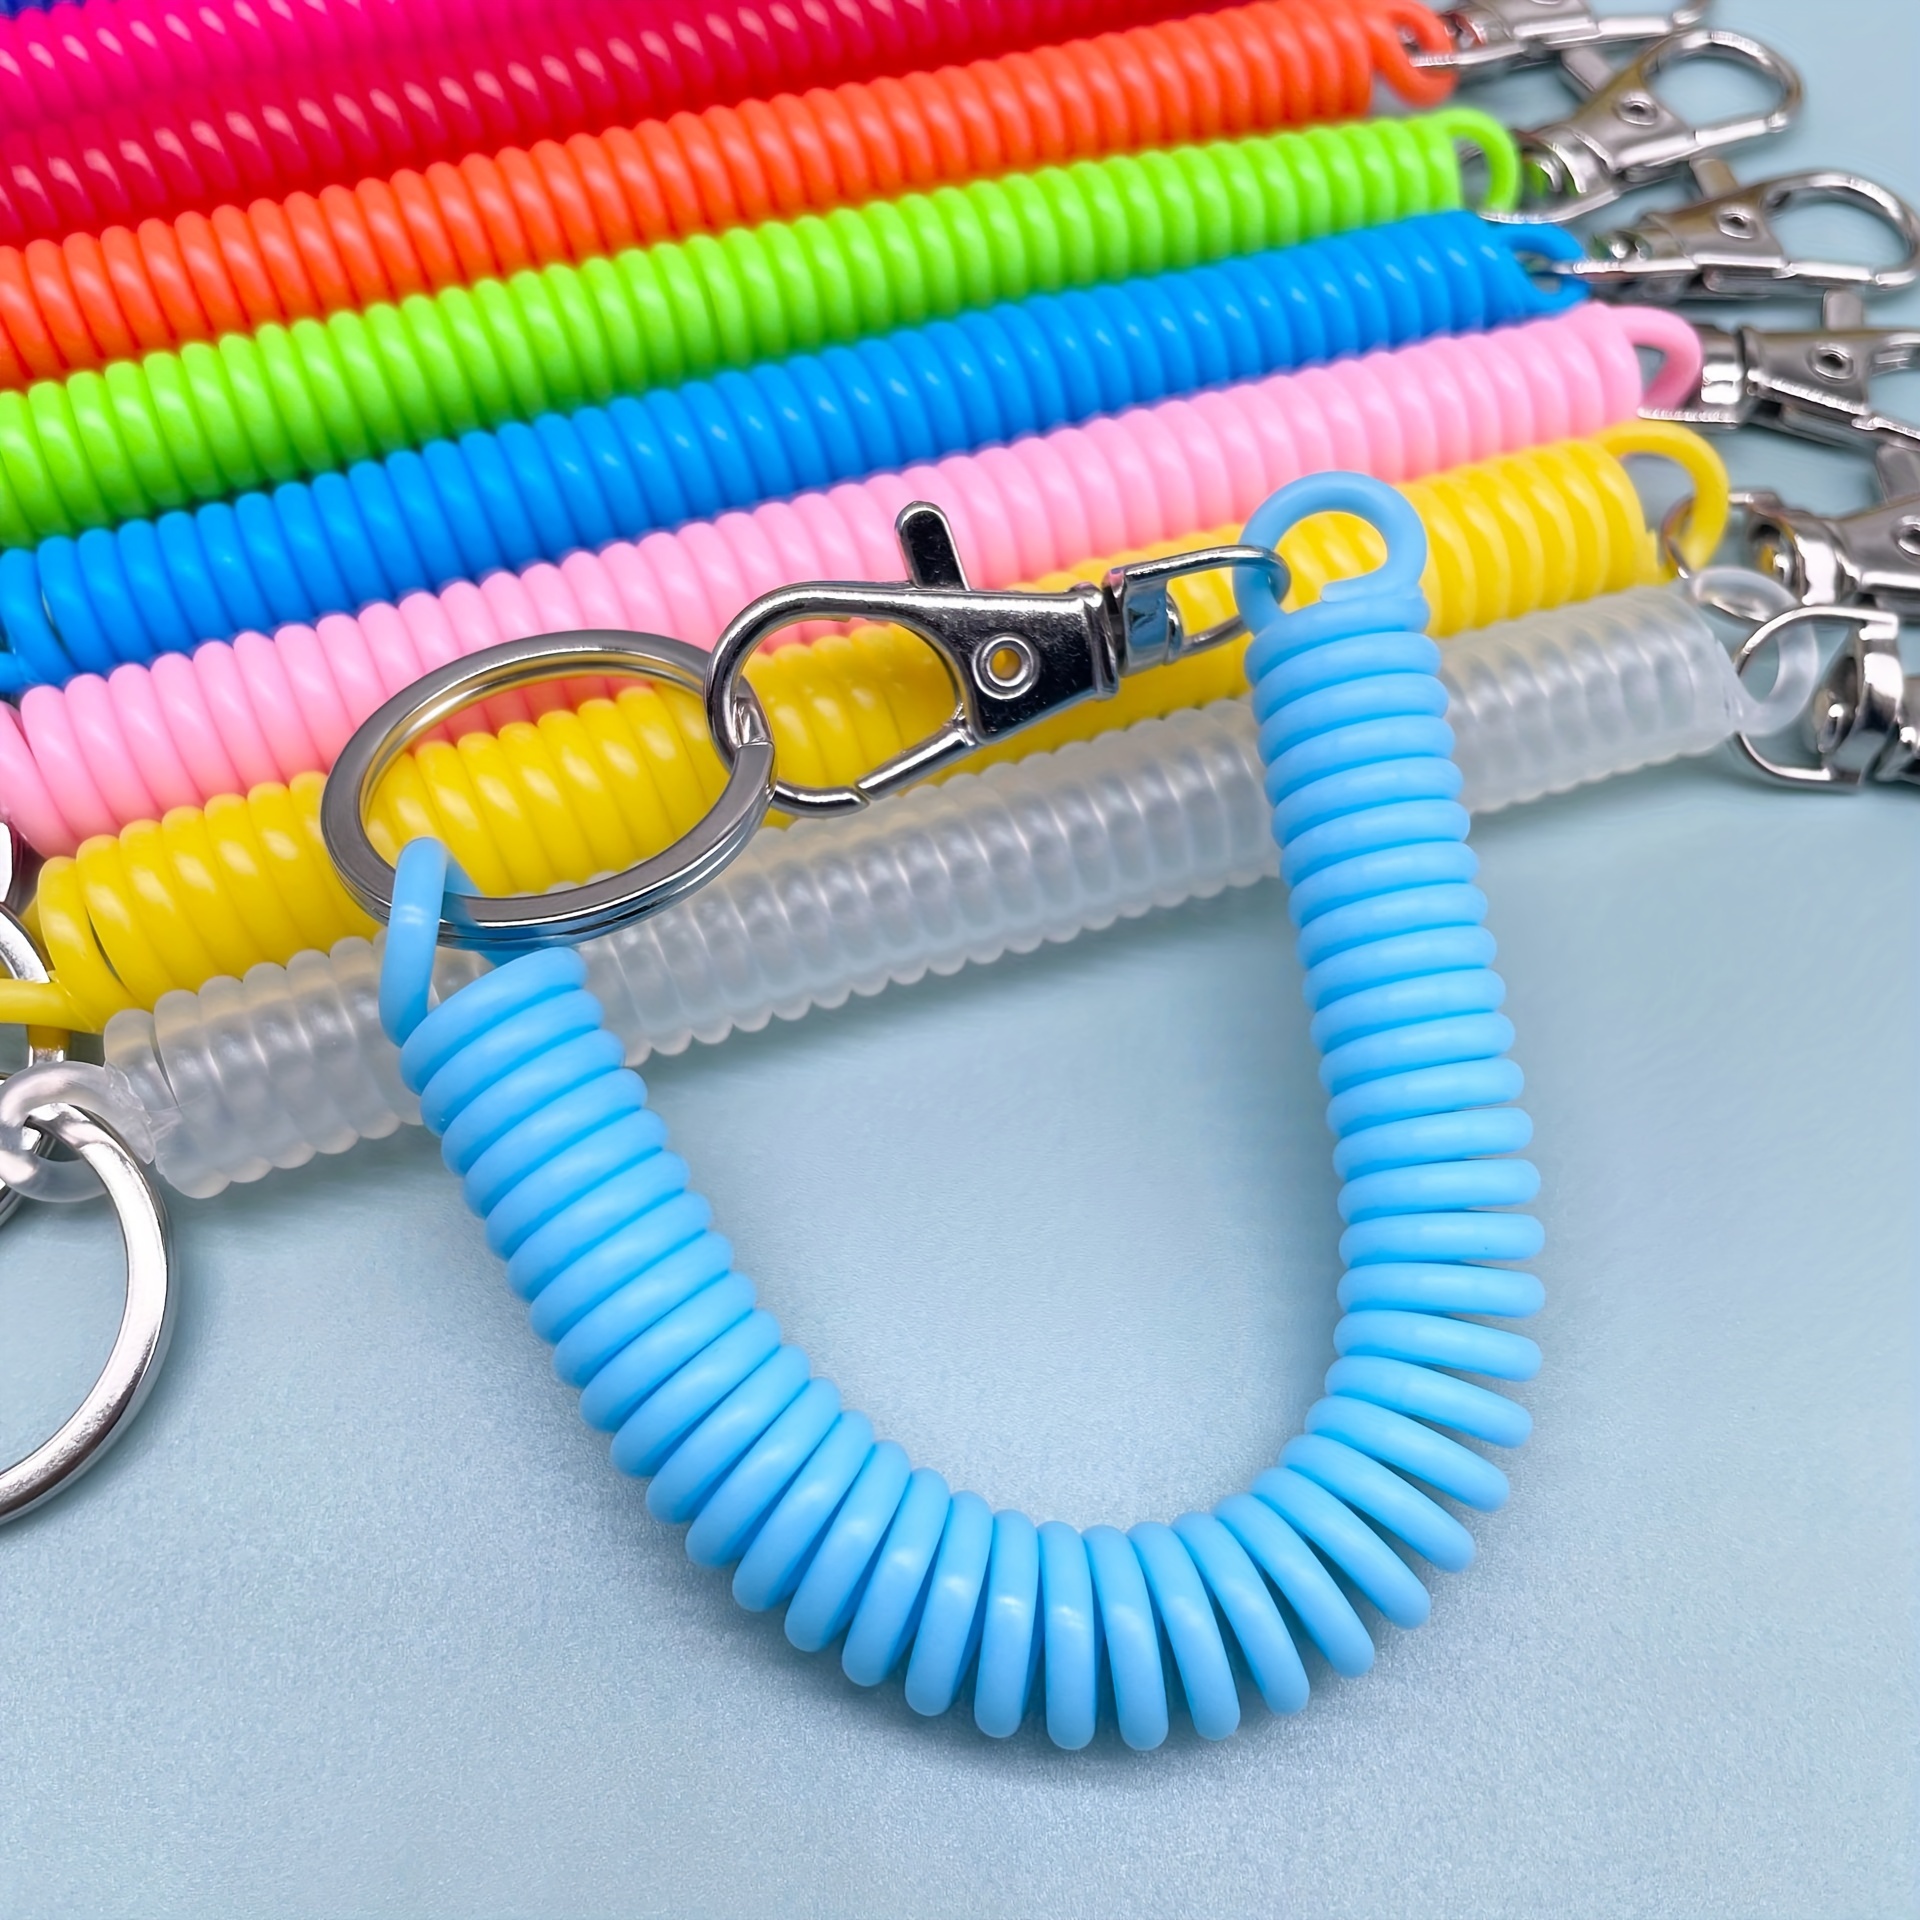 Dog Key Chain - Bright Multicolor - Woman - Keychains 